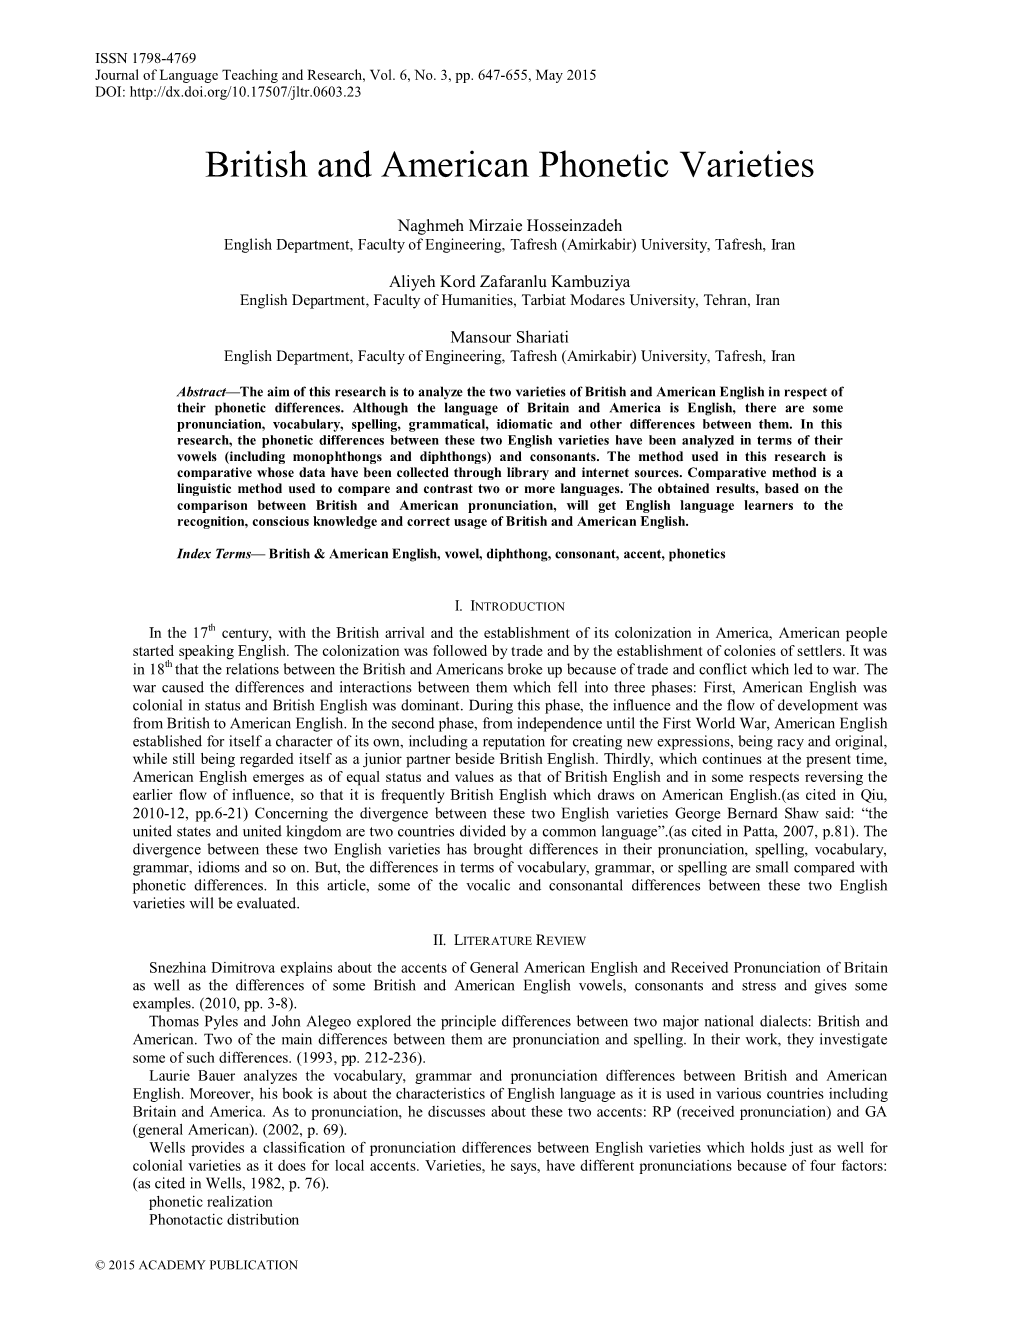 British and American Phonetic Varieties